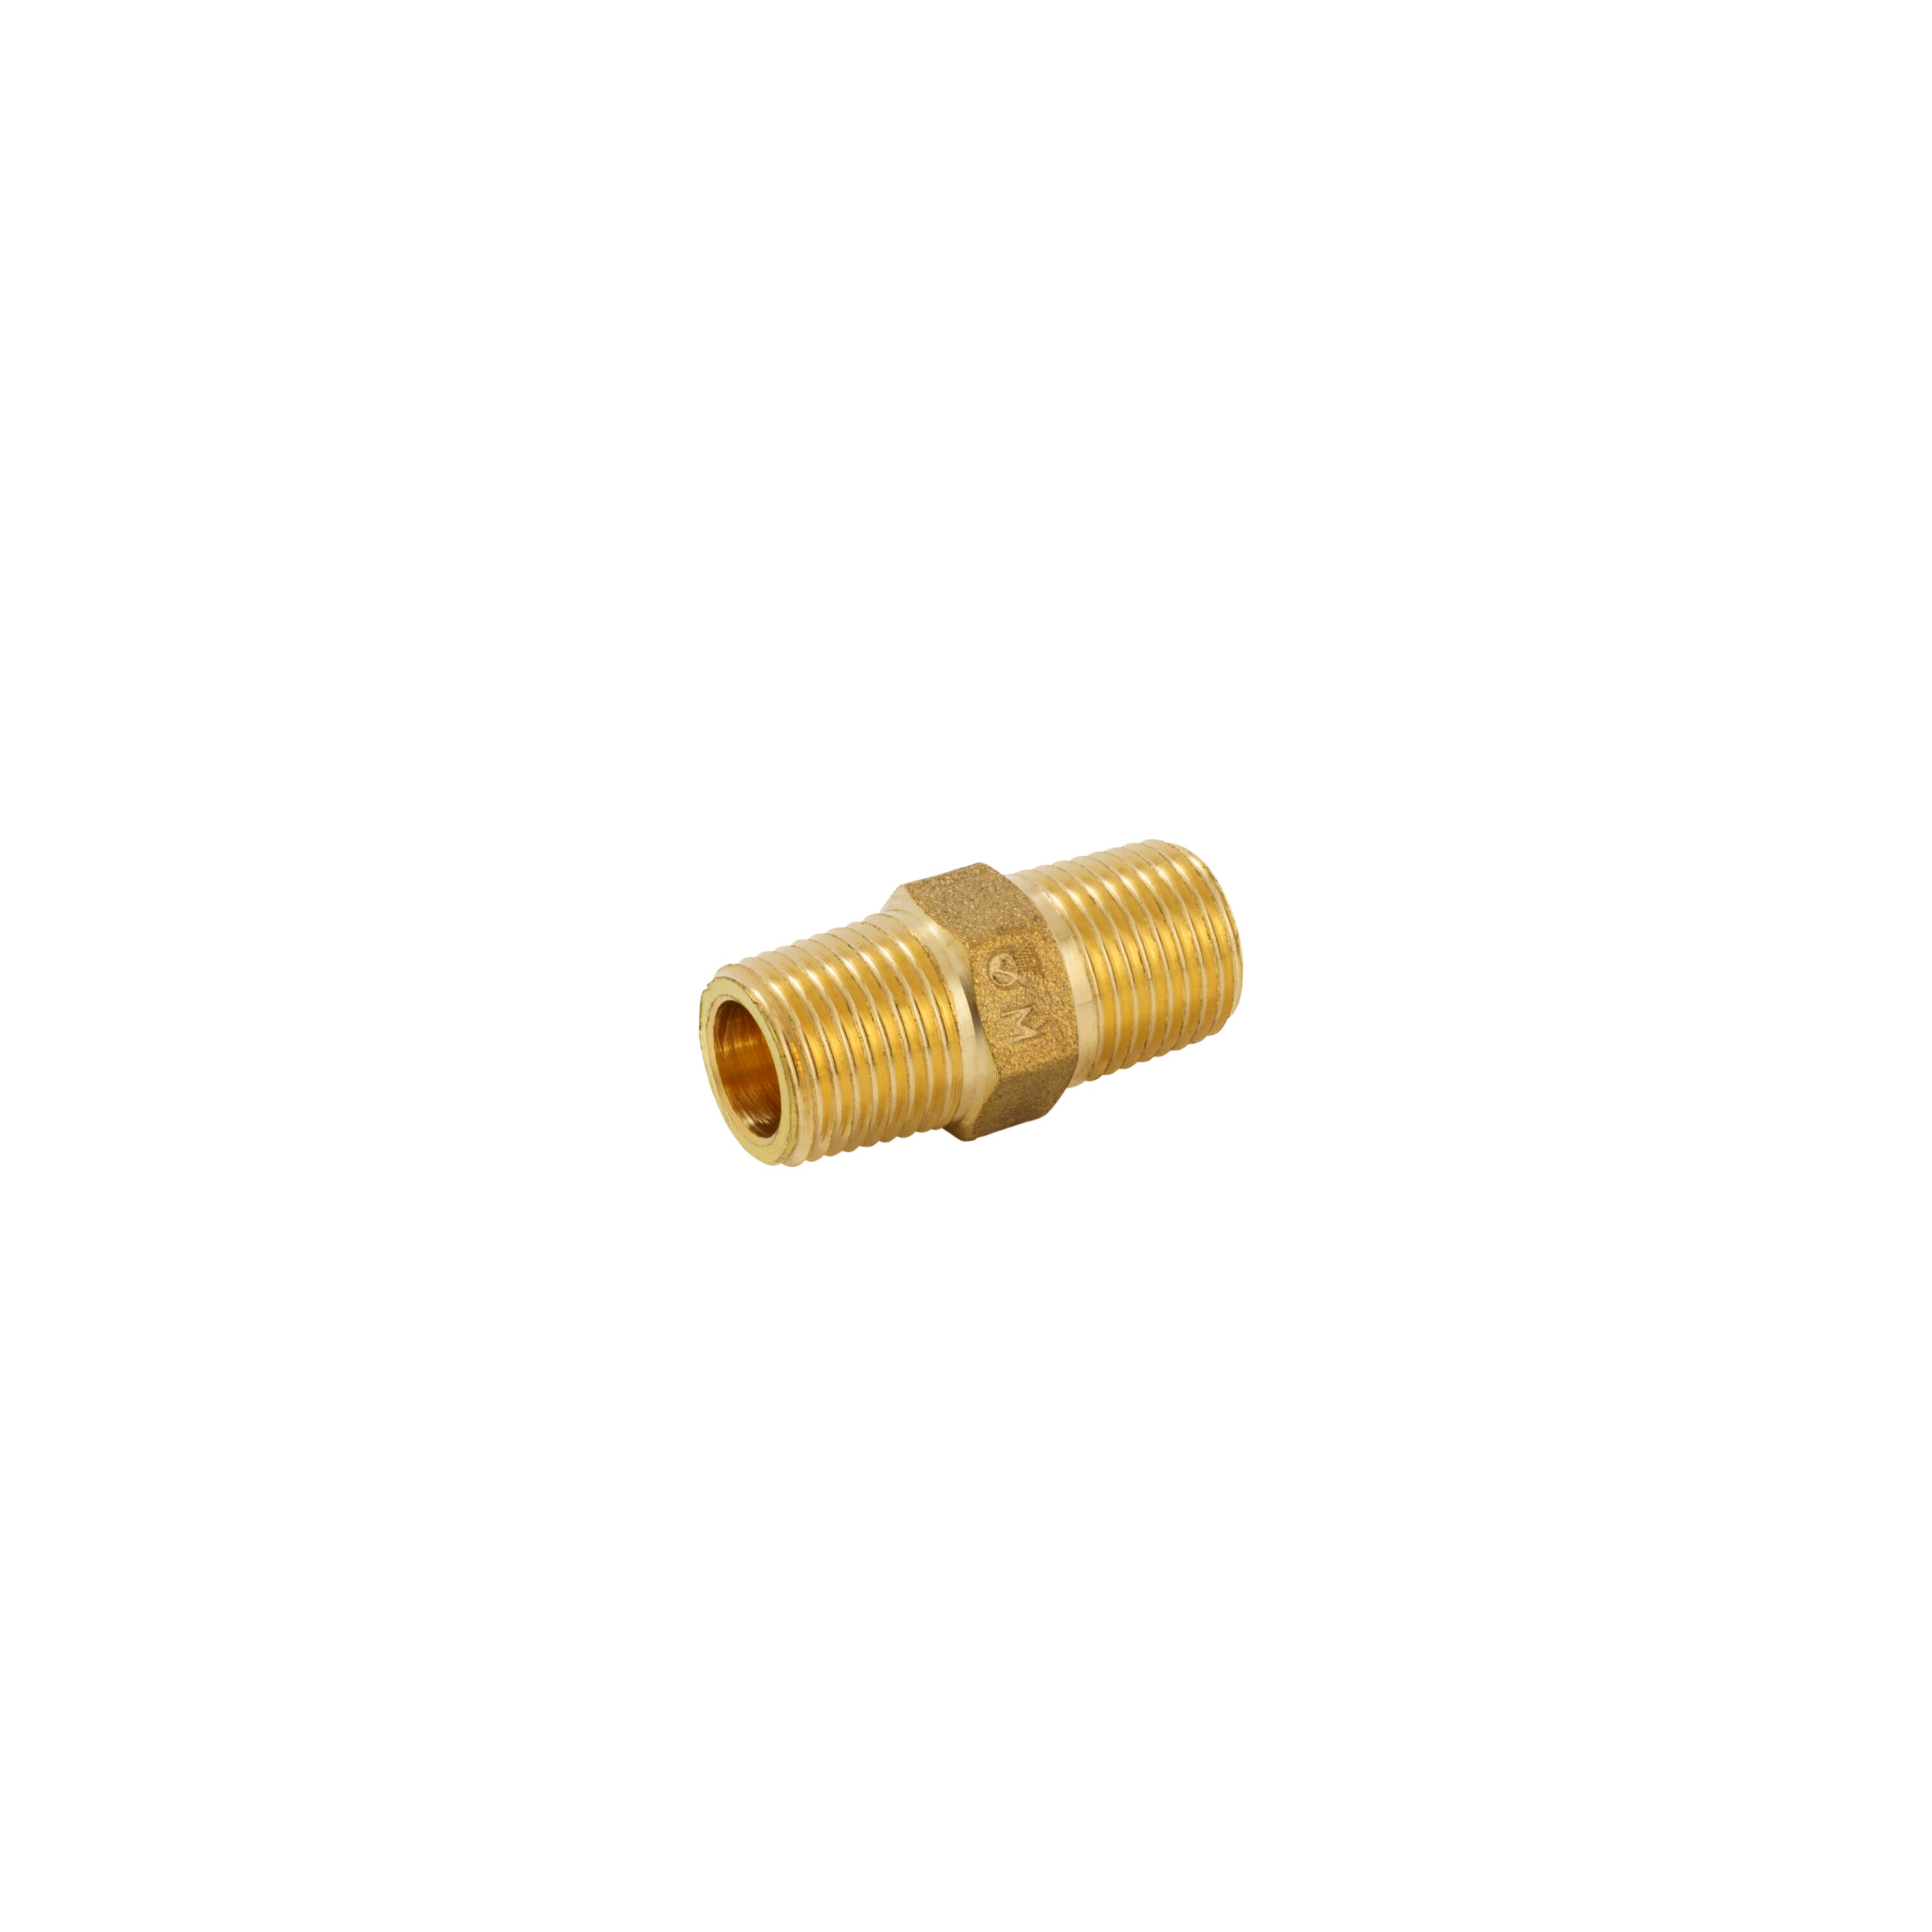 Proline Series 1/8-in x 1/8-in Threaded Male Adapter Nipple